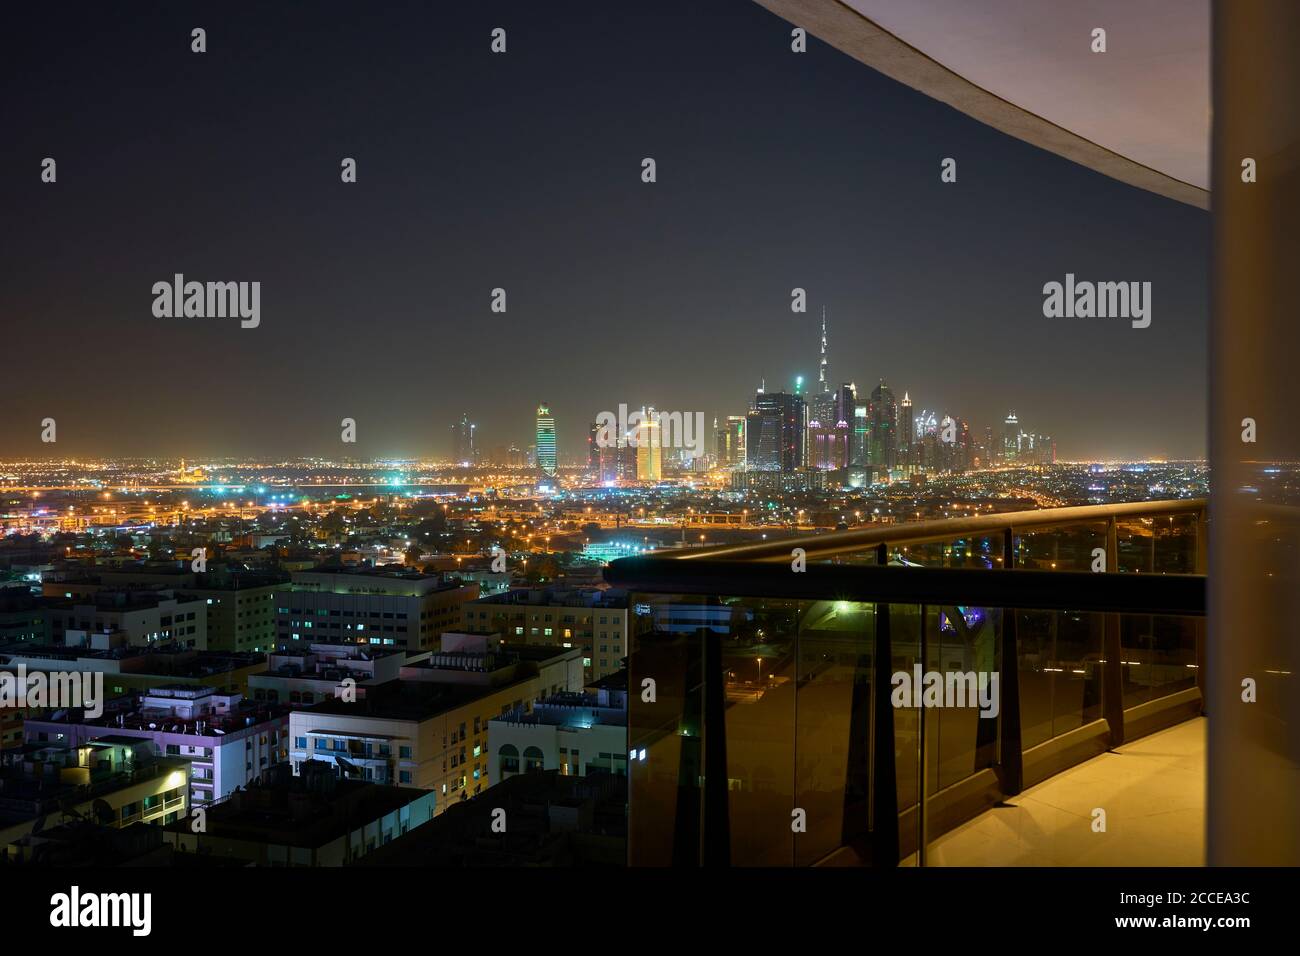 Emiratos Árabes Unidos, EAU, África, Dubai, Centro de la ciudad, CBD, Oriente Medio, paisaje urbano iluminado por la noche, Foto de stock